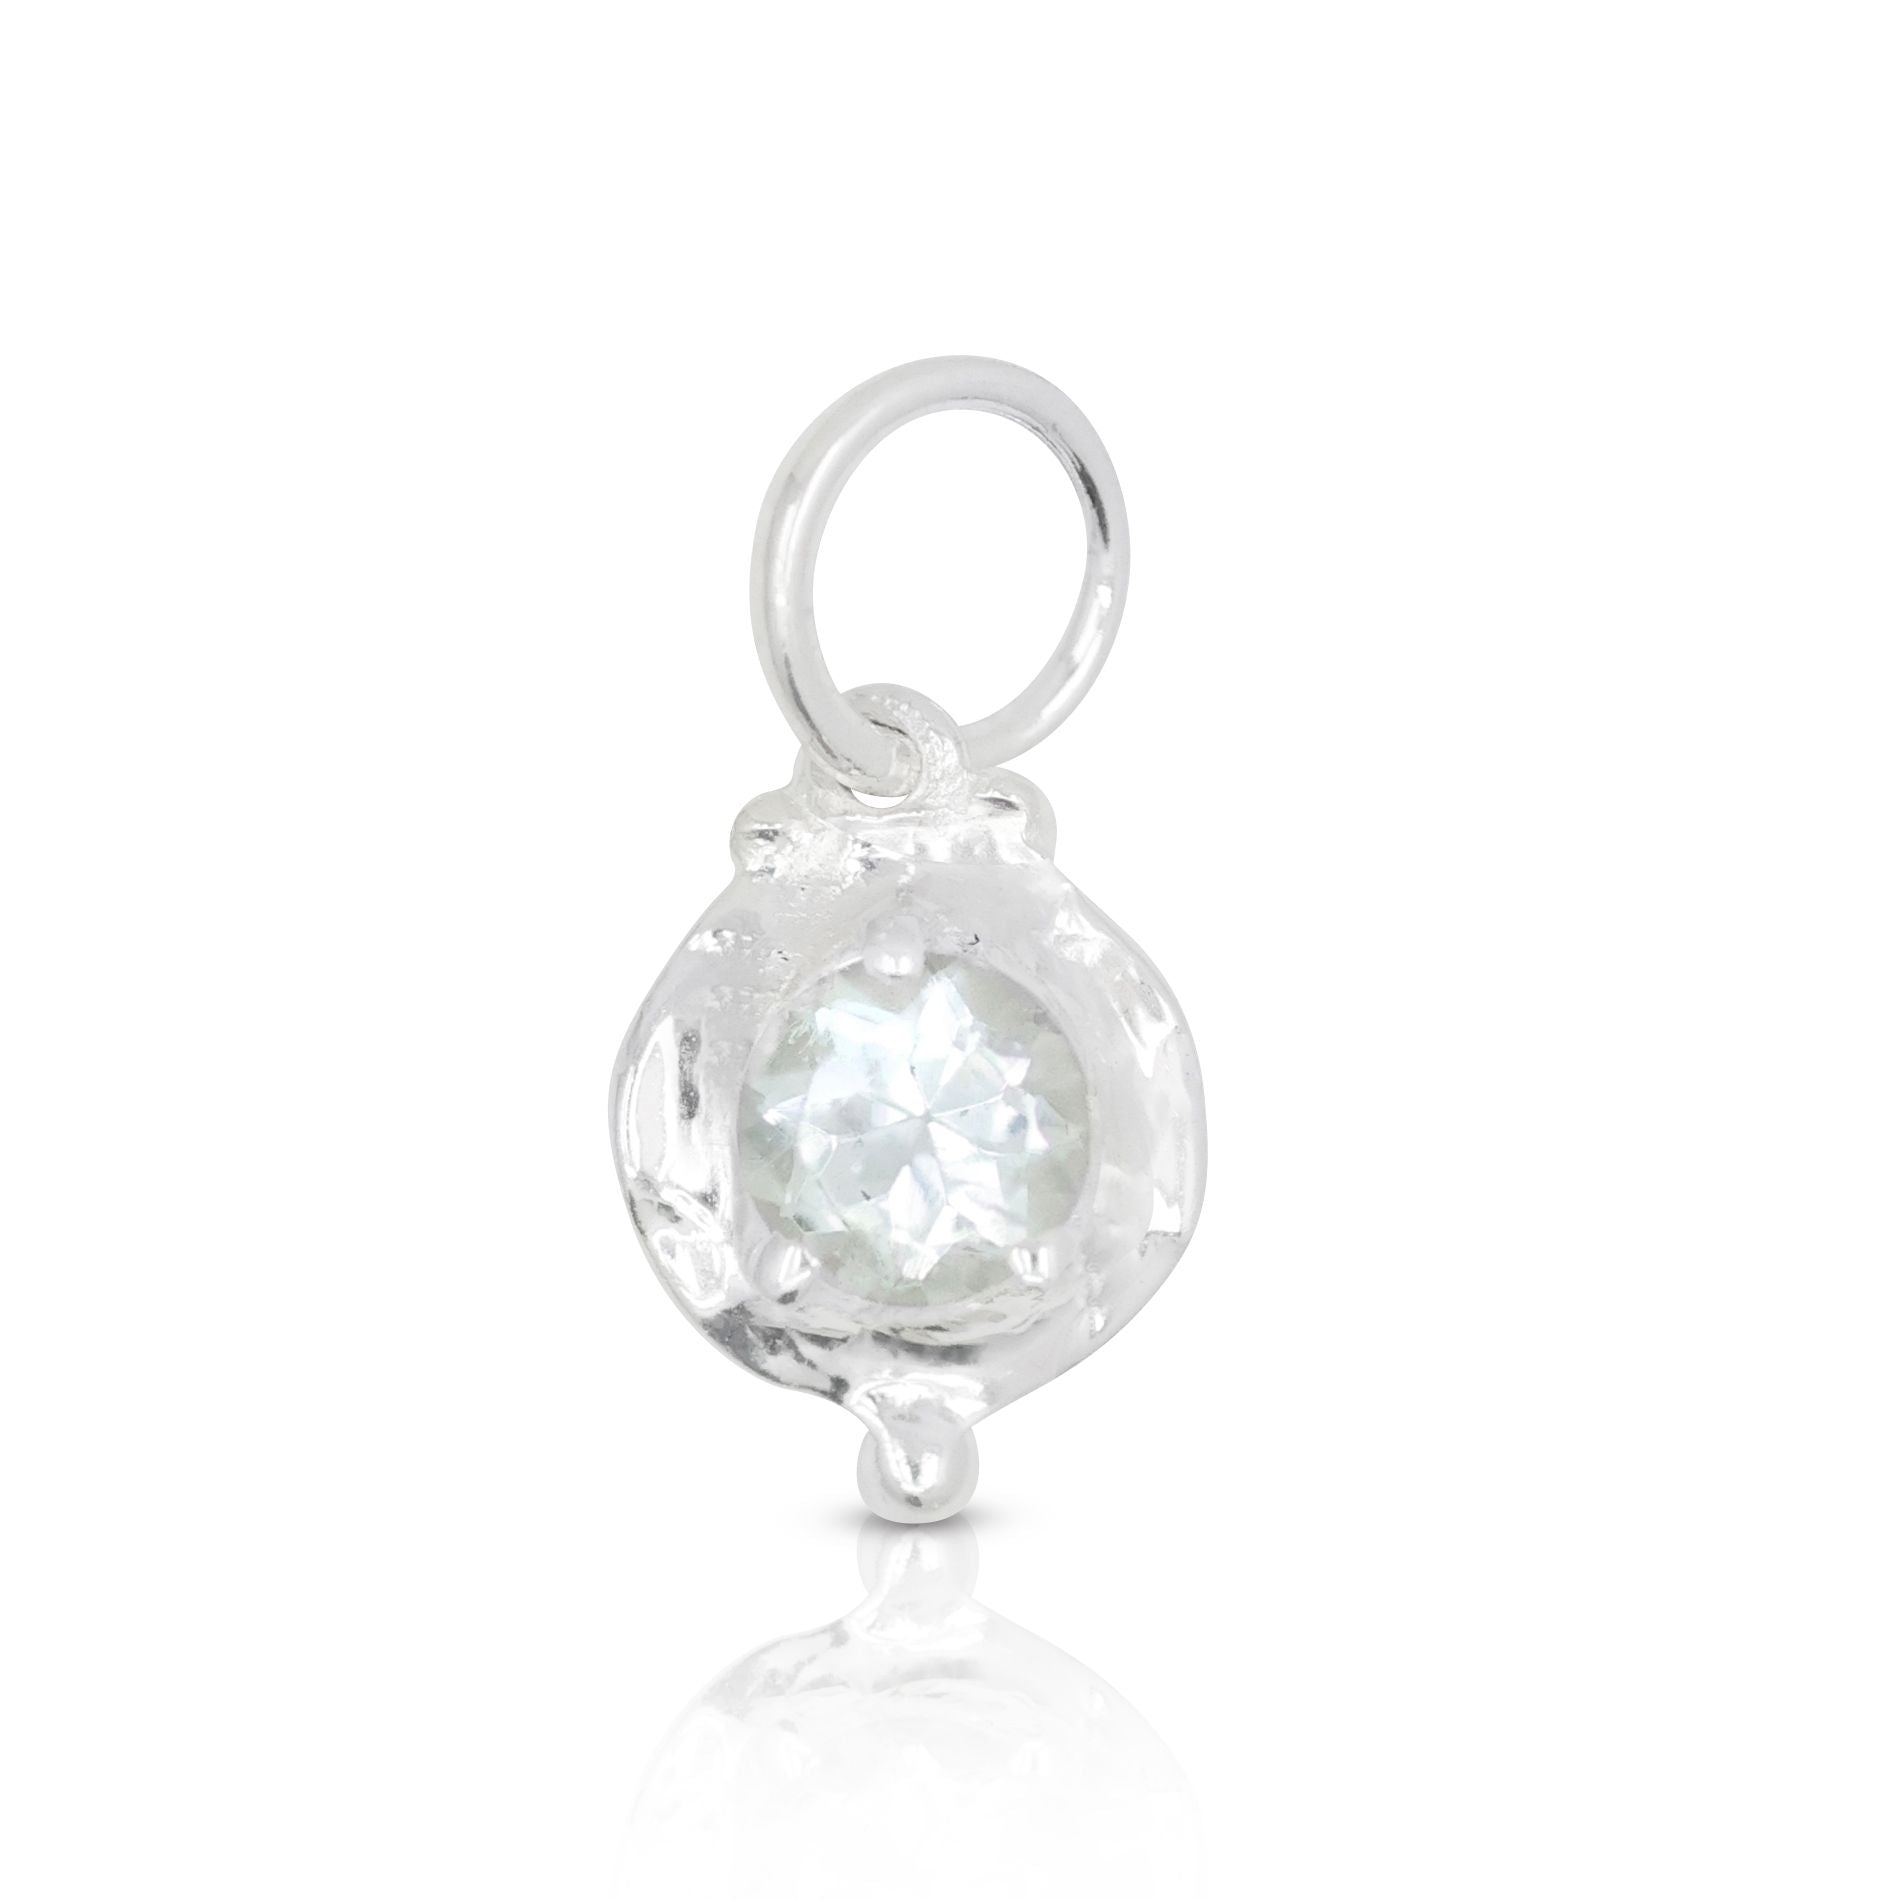 Toni May March Aquamarine Silver Birthstone Necklace Charm